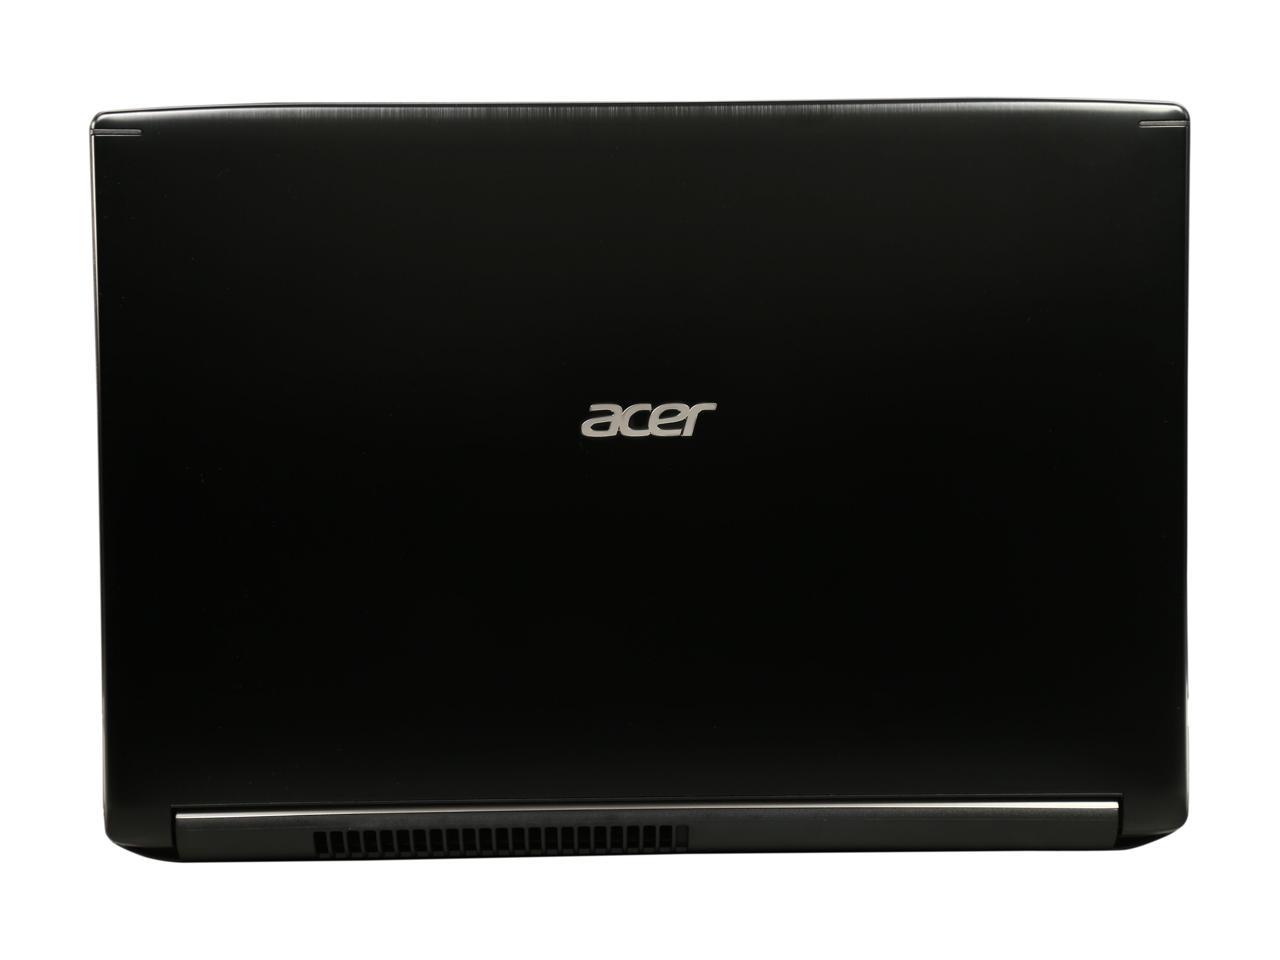 Acer - Gaming Laptop - 17.3" FHD IPS 60 Hz, Intel i7-8750H, NVIDIA GeForce GTX 1060 6 GB GDDR5, 16 GB Memory, 256 GB SSD, Windows 10 Home, VR Ready, Aspire 7 (A717-72G-700J) - ONLY @ NEWEGG